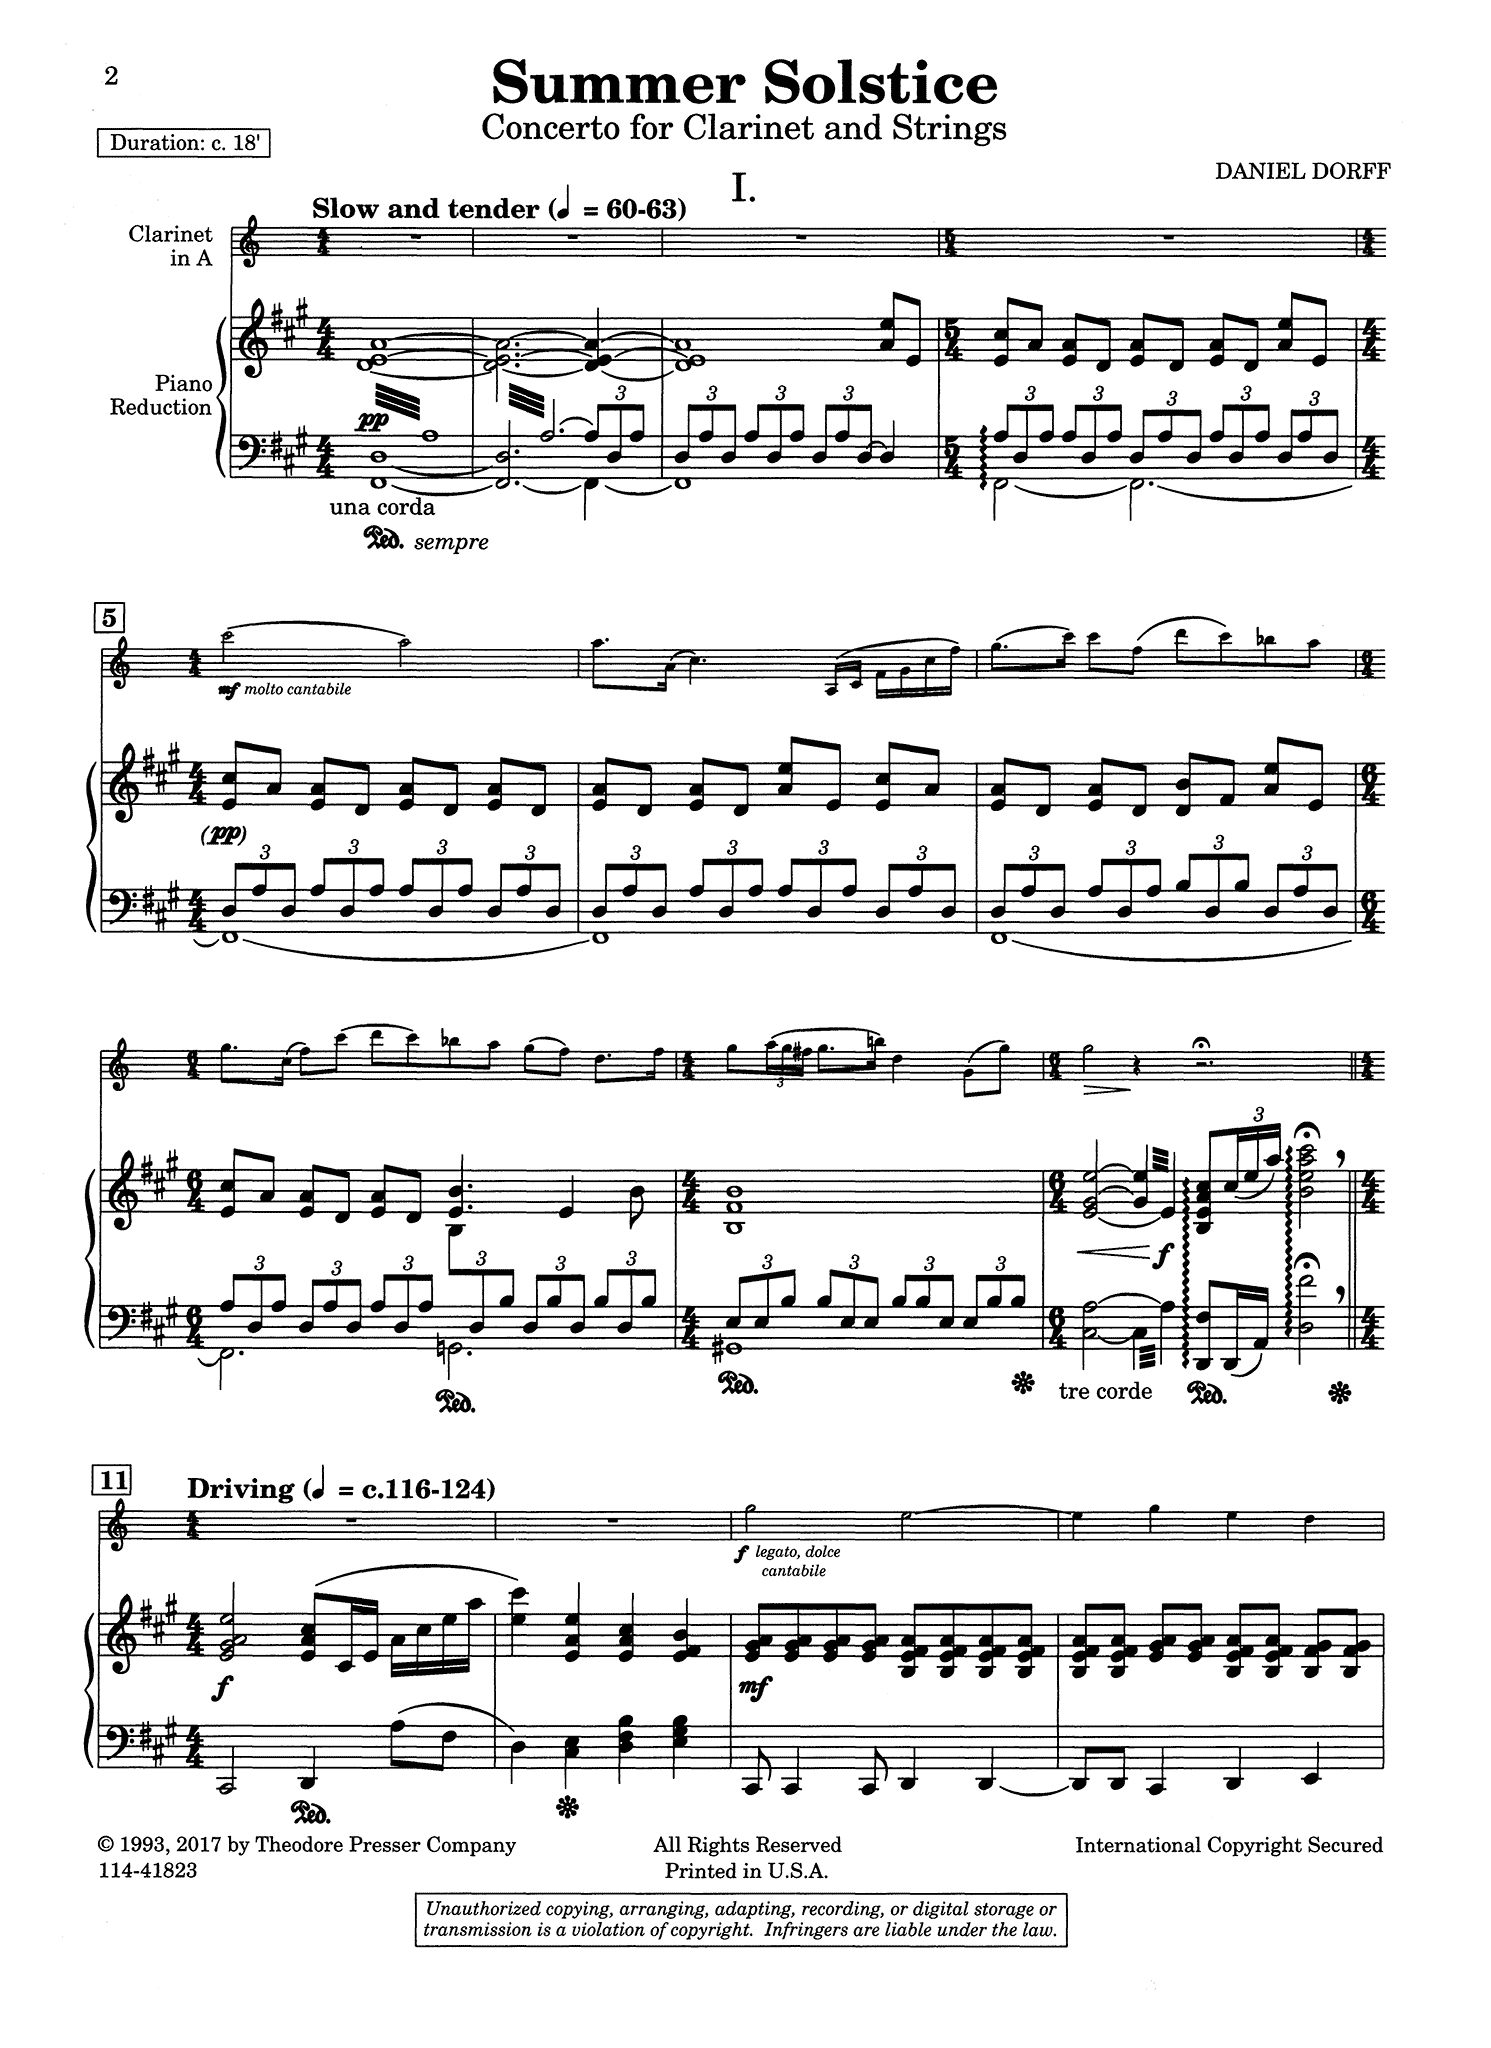 Dorff Summer Solstice clarinet concerto piano reduction - Movement 1